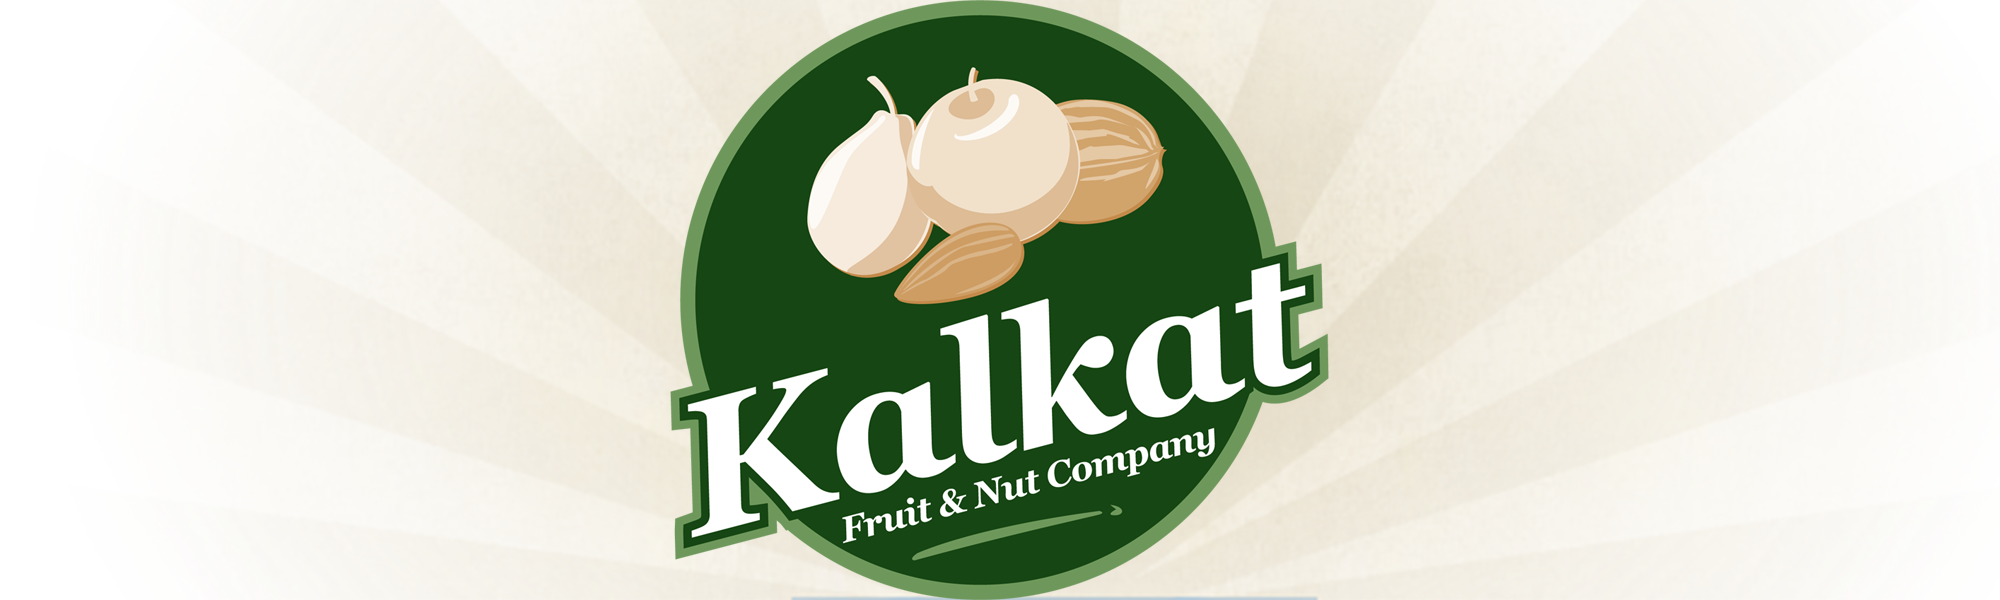 Kalkat Fruit and Nut Company